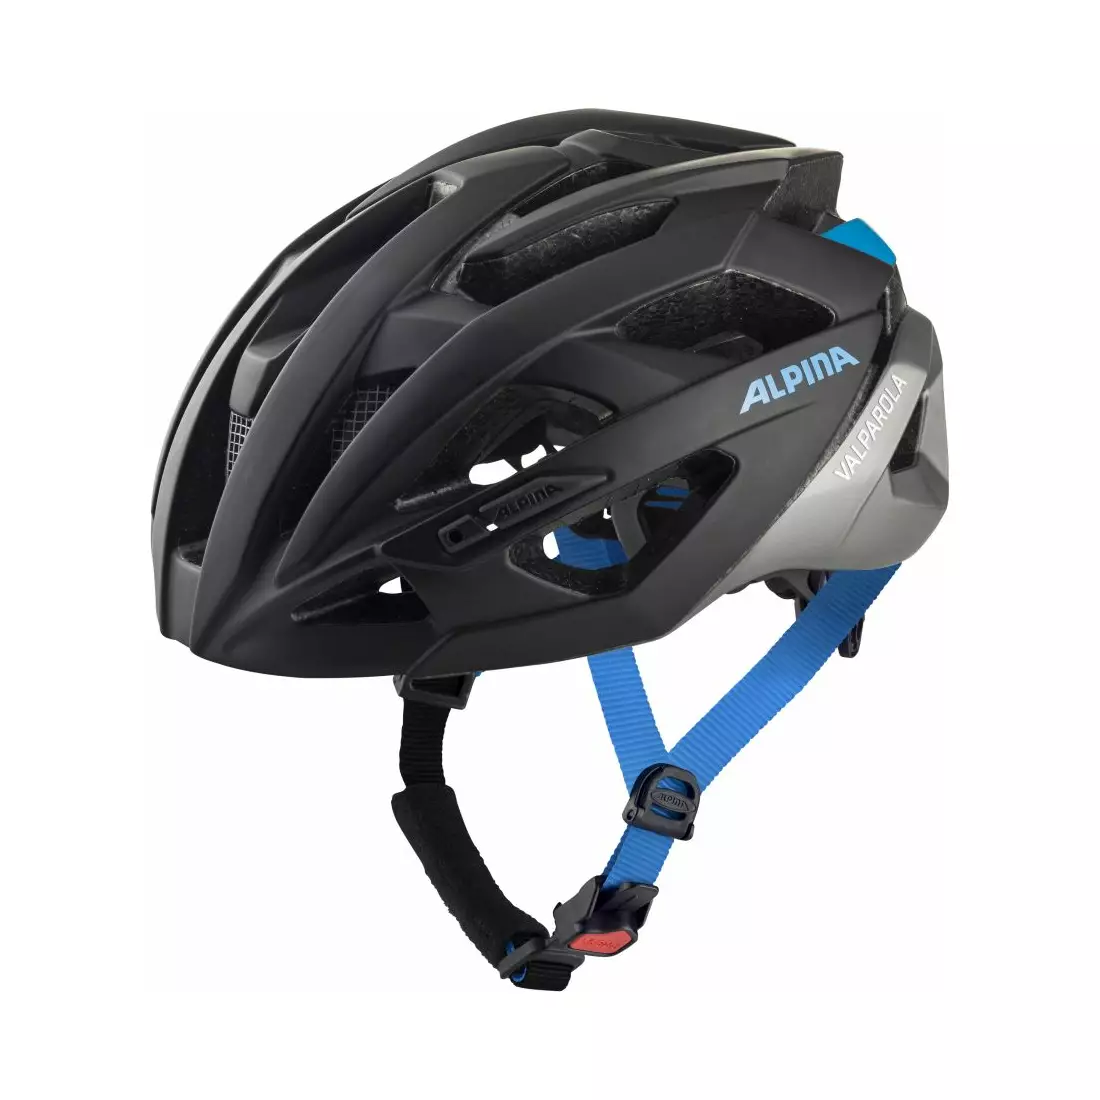 ALPINA VALPAROLA BLACK-SILVER-BLUE bicycle helmet